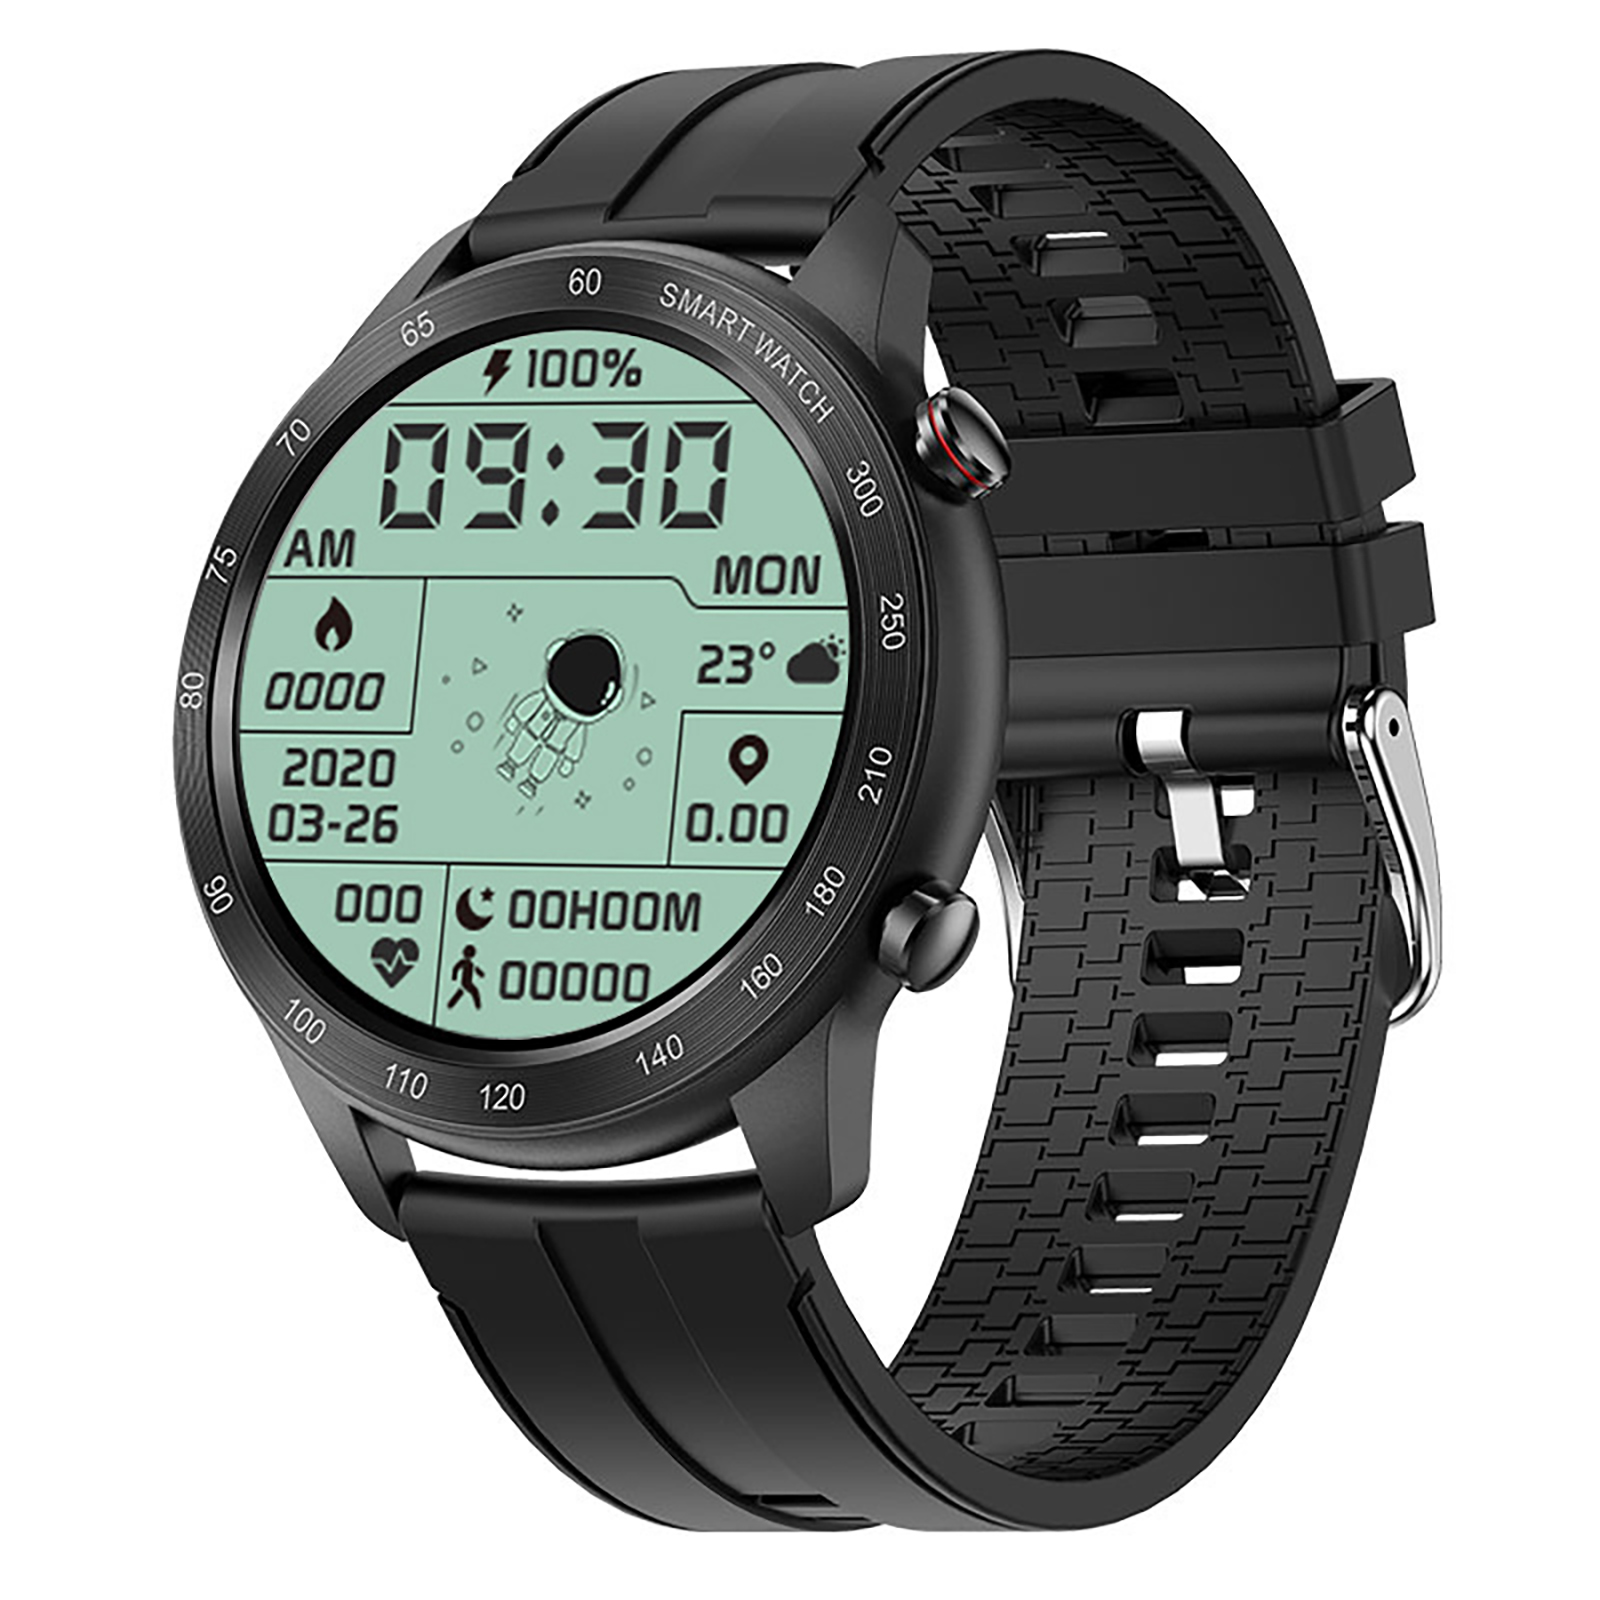 ZEBLAZE Mx5 Smart Watch Bluetooth Call Music Playback Waterproof Bracelet